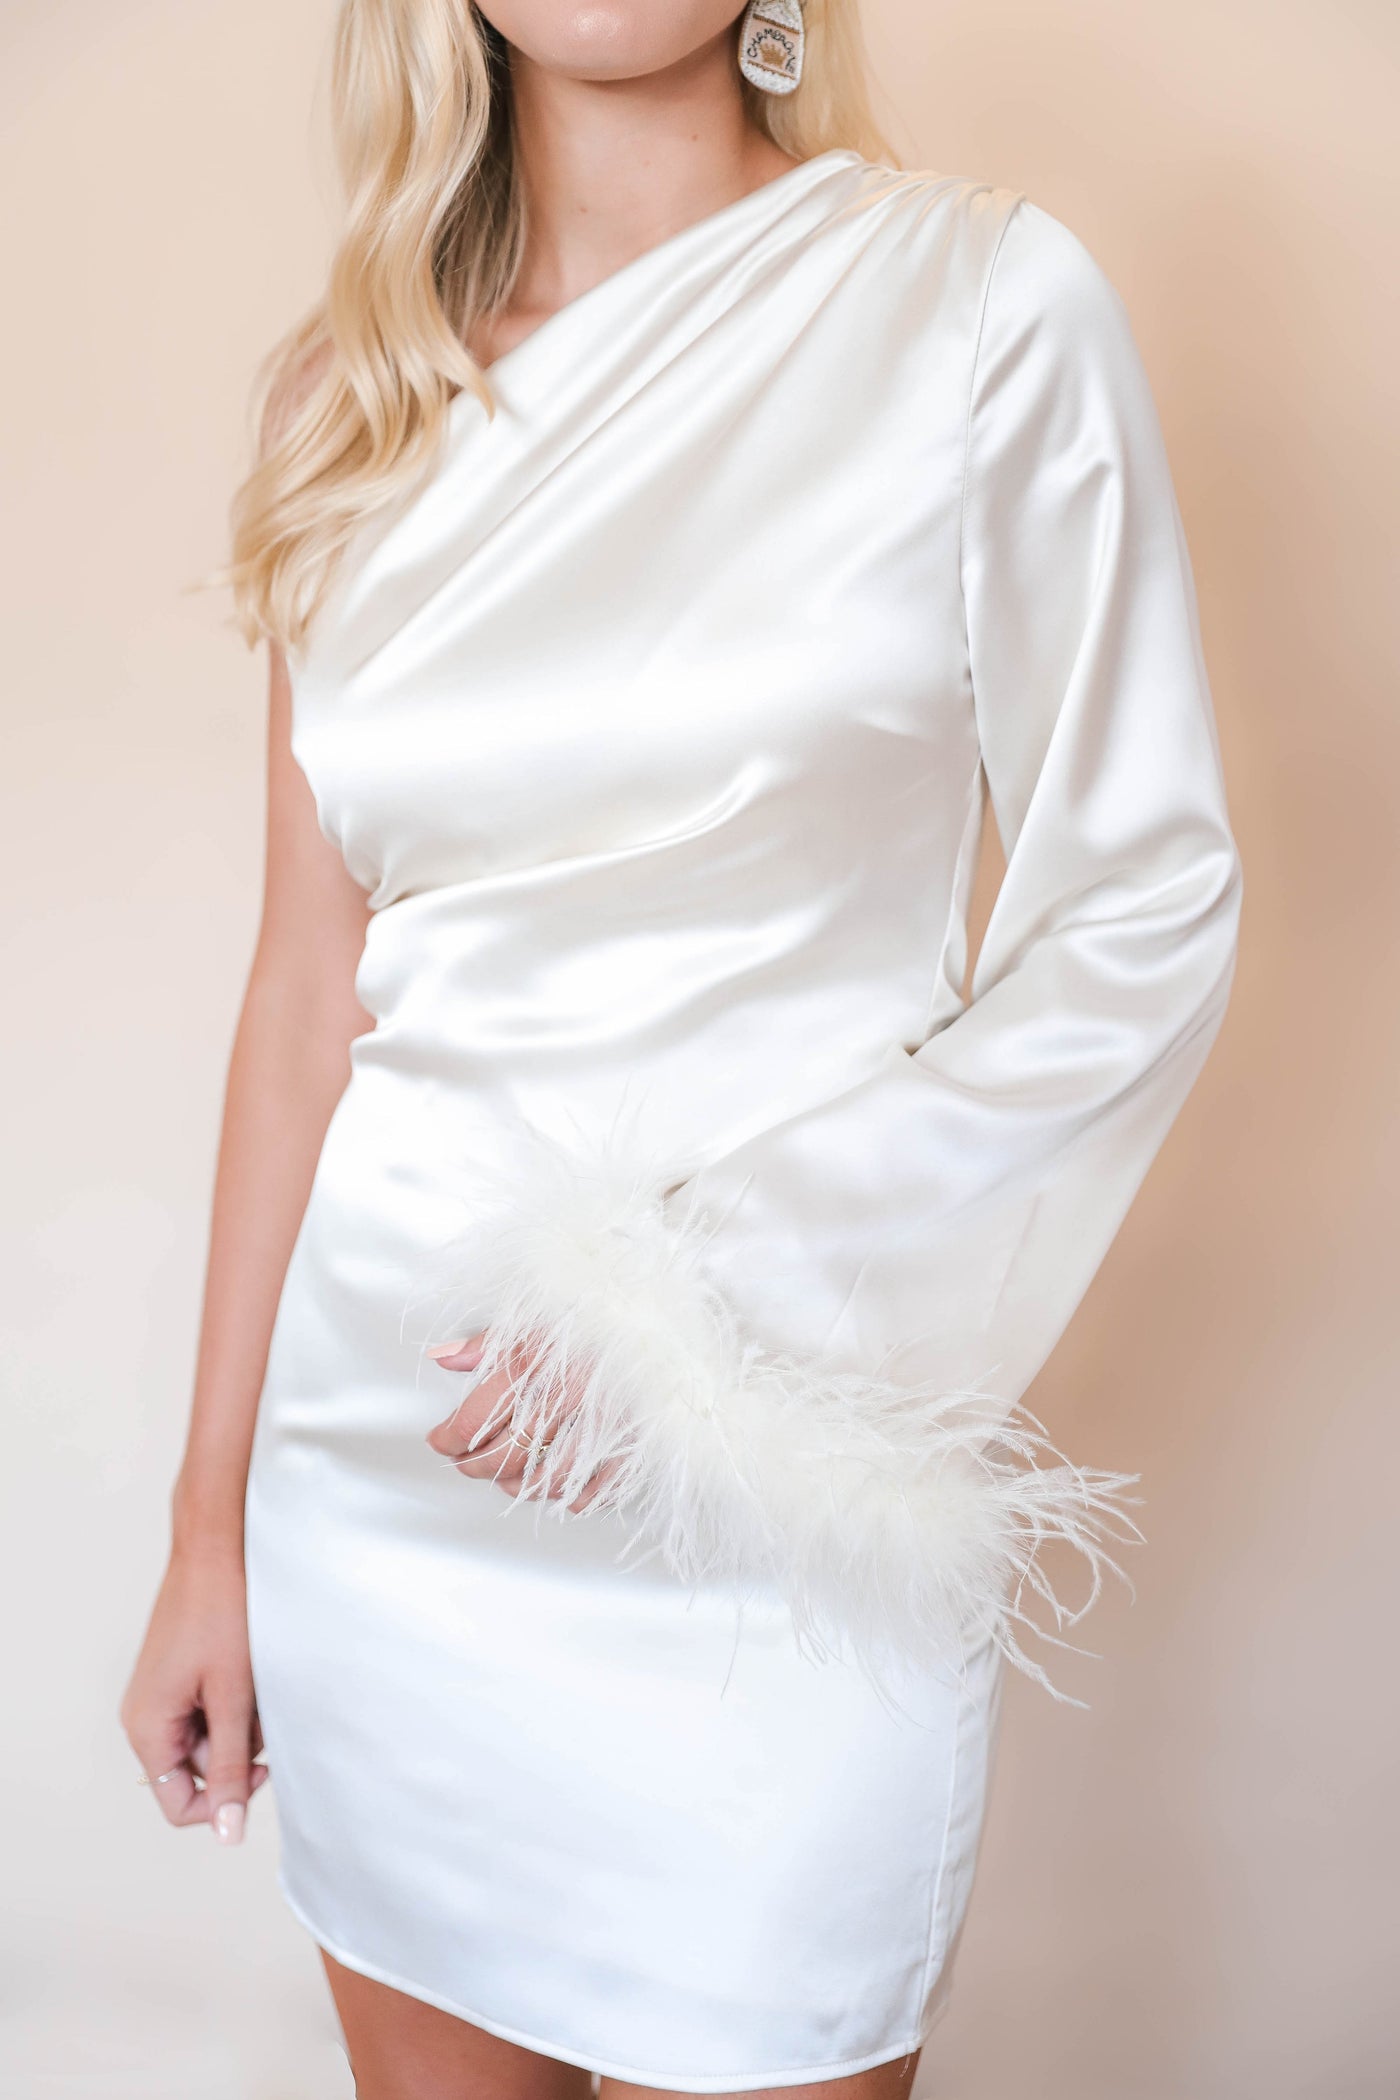 Cream Satin Dress- White Feather Mini Dress- One Shoulder Cocktail Dress- Main Strip Feather Dress